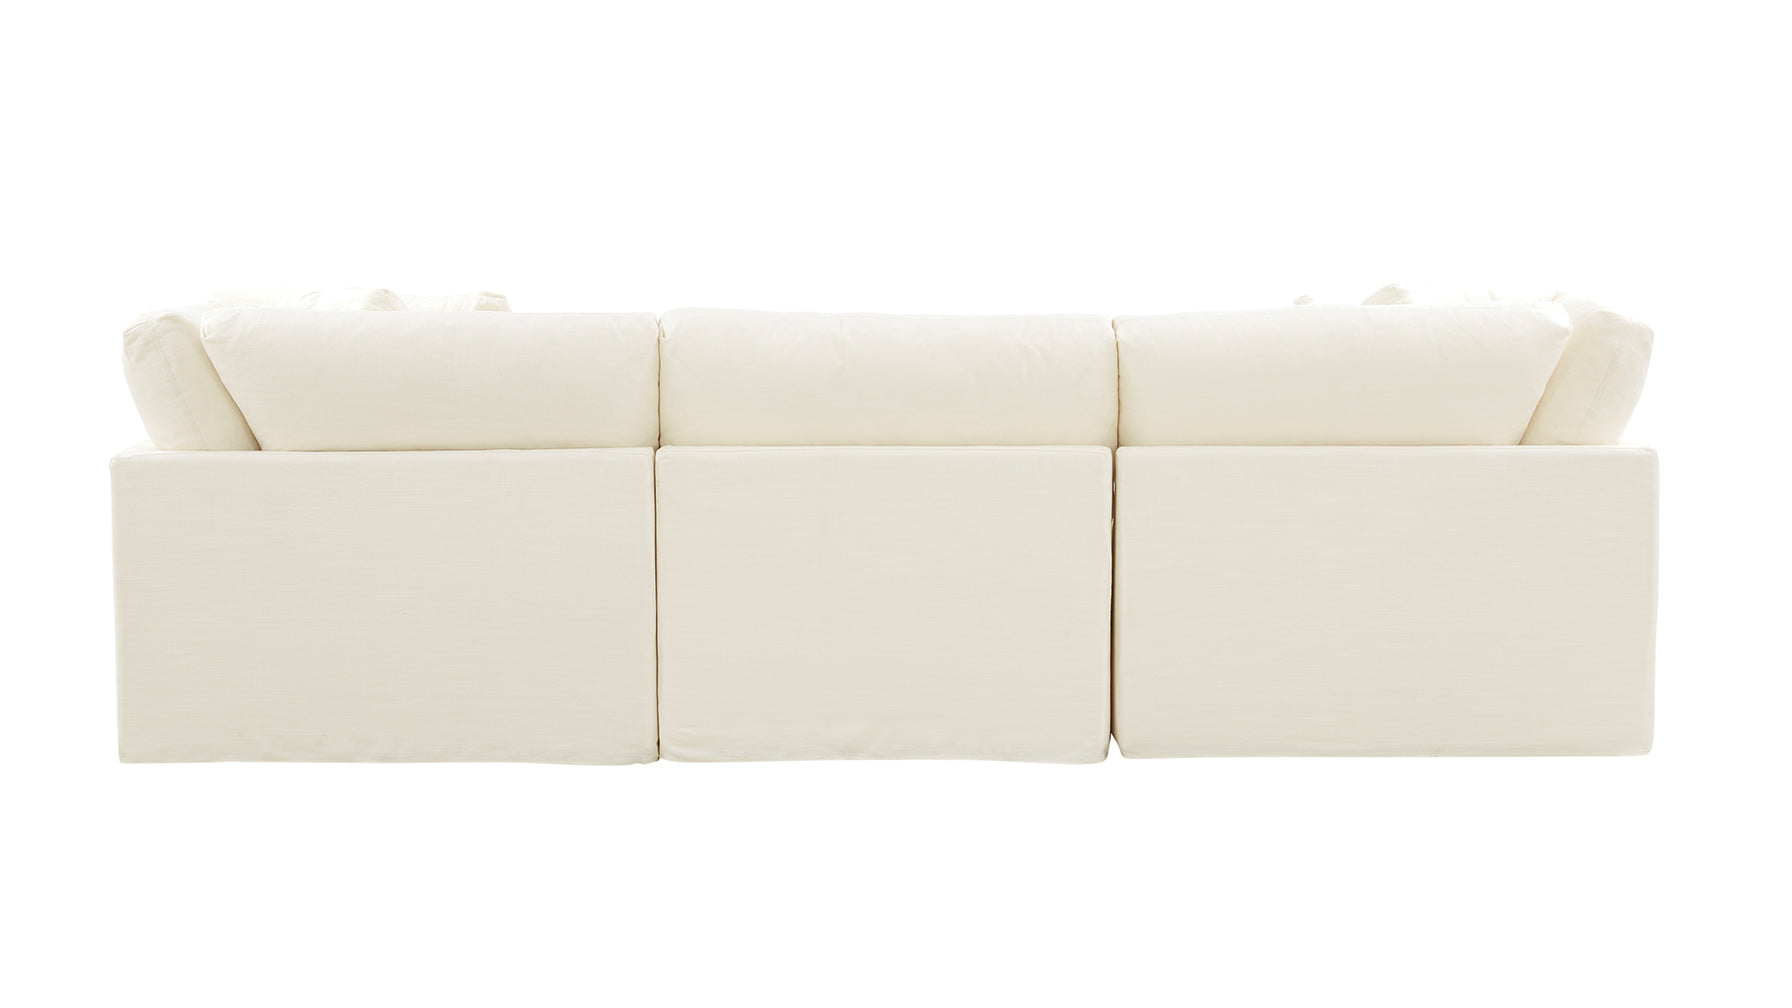 Get Together™ 3-Piece Modular Sofa, Standard, Cream Linen - Image 11